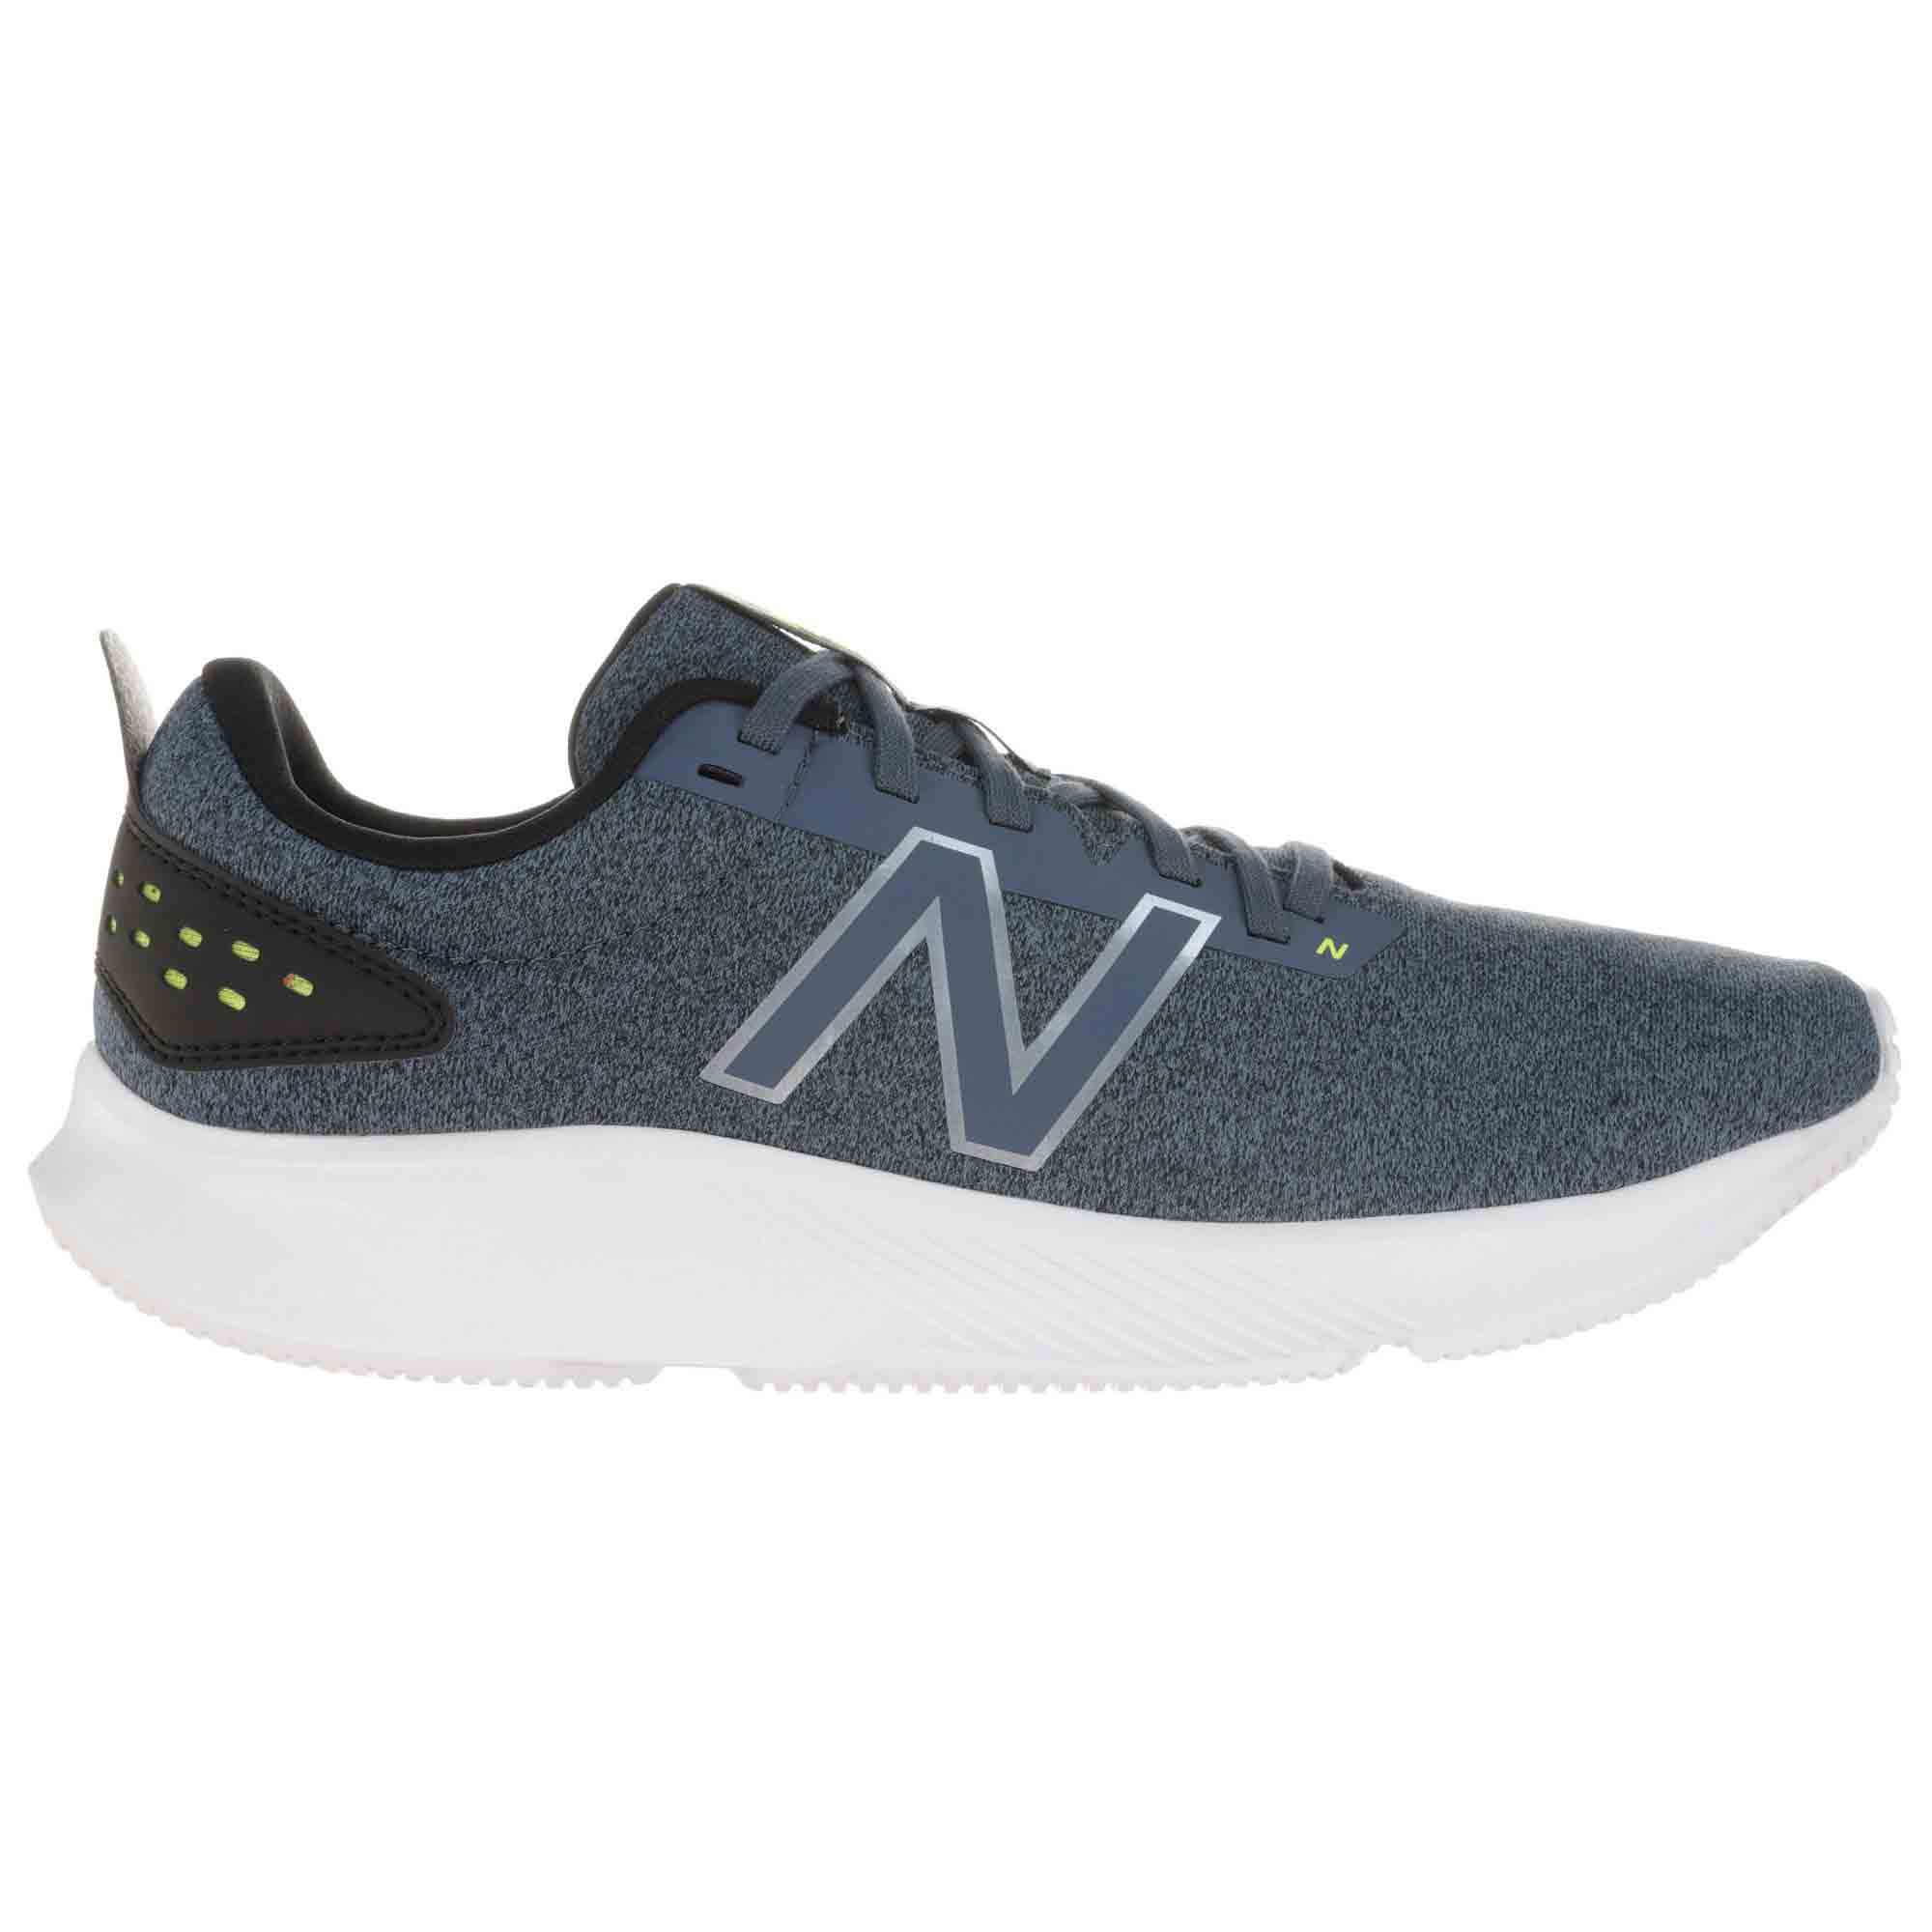 New Balance Mens ME430 v2 4E Running Shoes